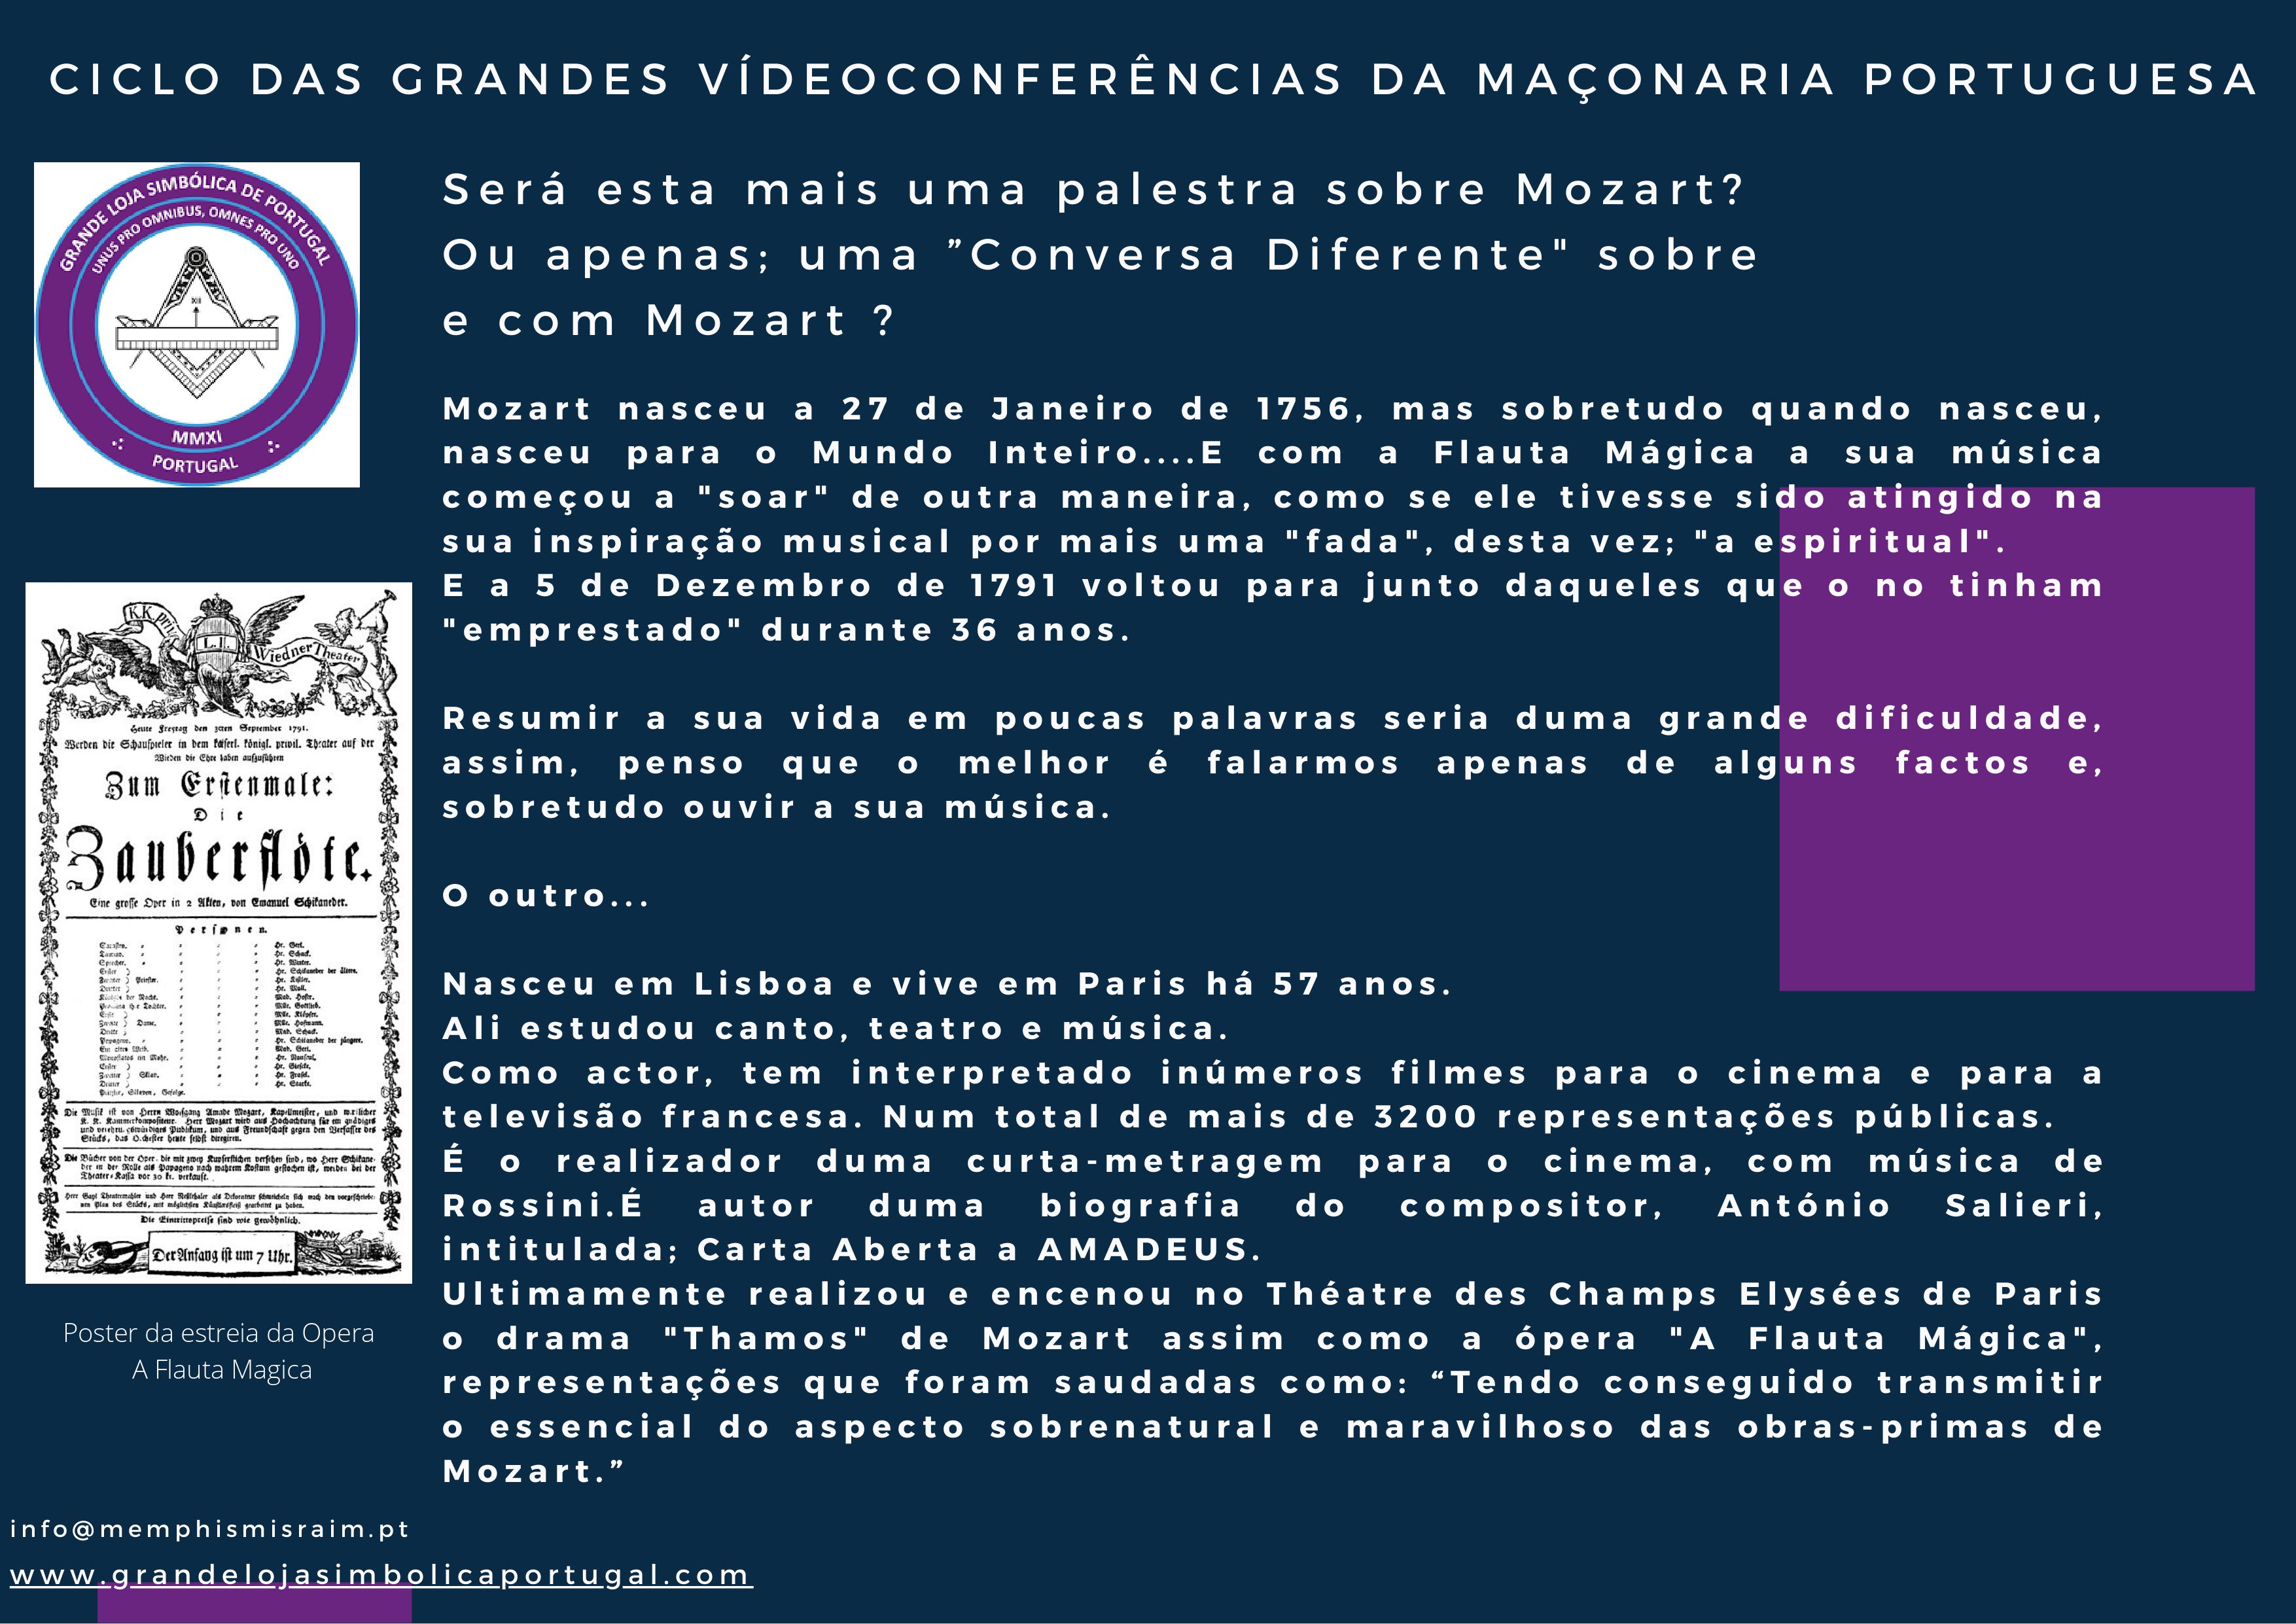 Ciclo Grandes Videoconferências da Maçonaria Portuguesa - Á conversa com Mozart - Flauta Magica.2.jpg